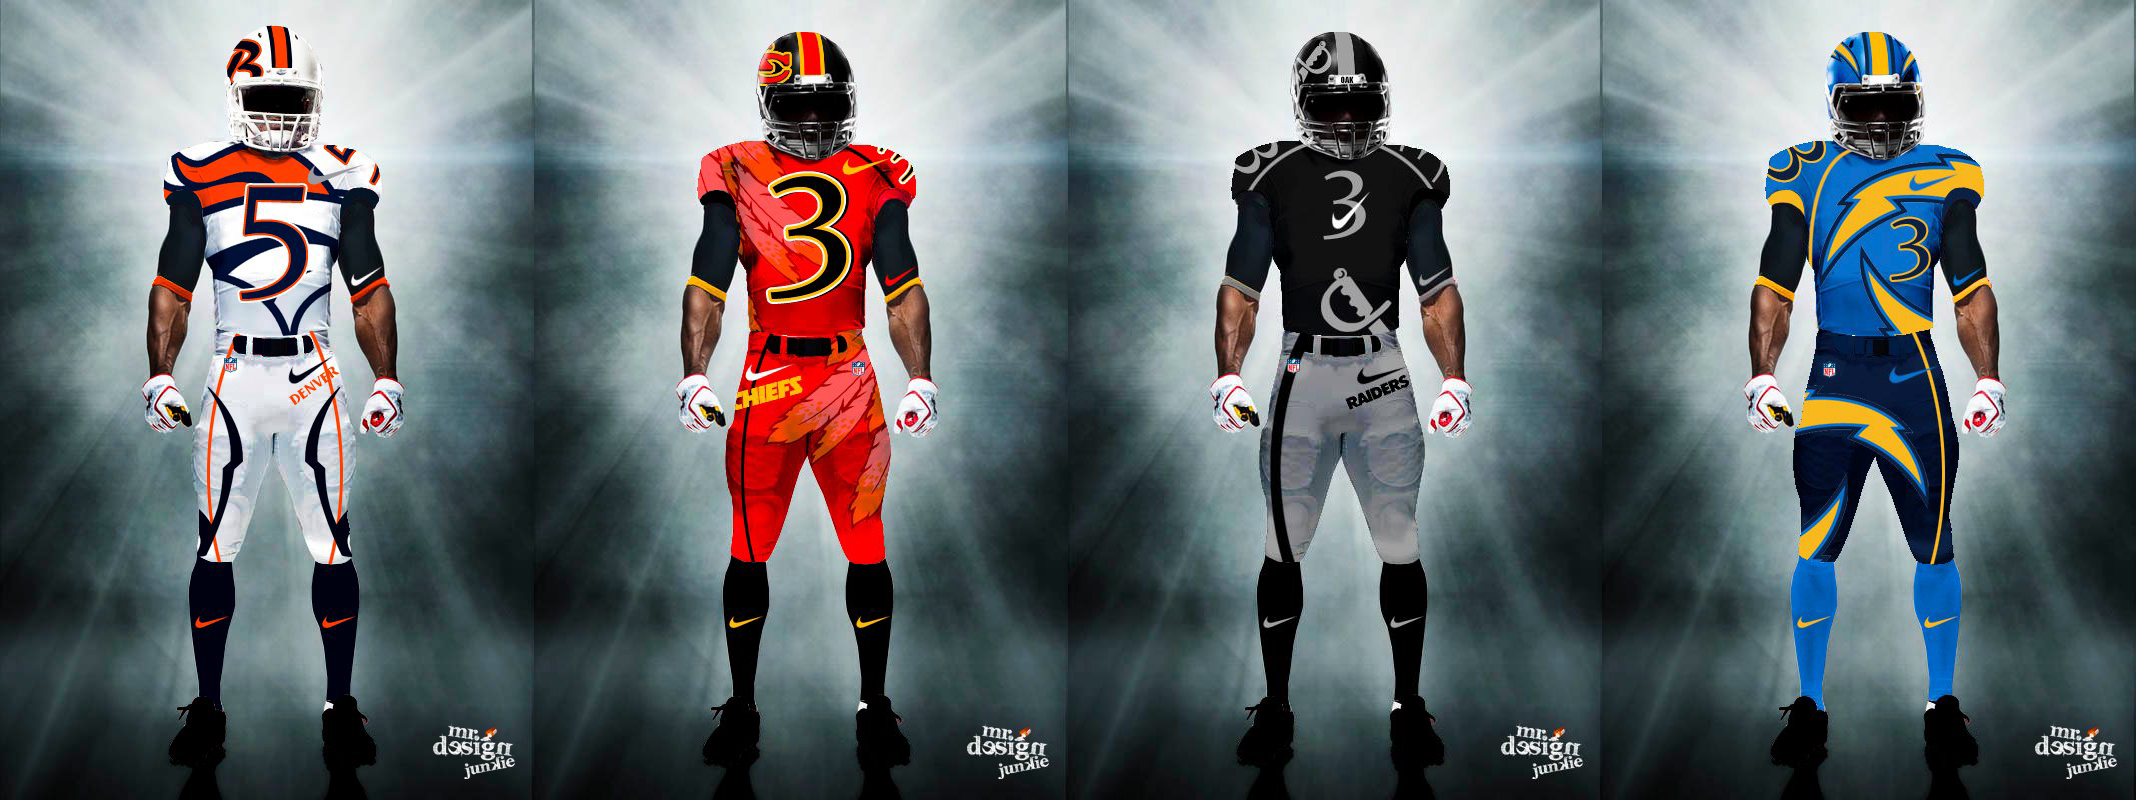 32 Uniform concepts - New York Giants - SportsWrath